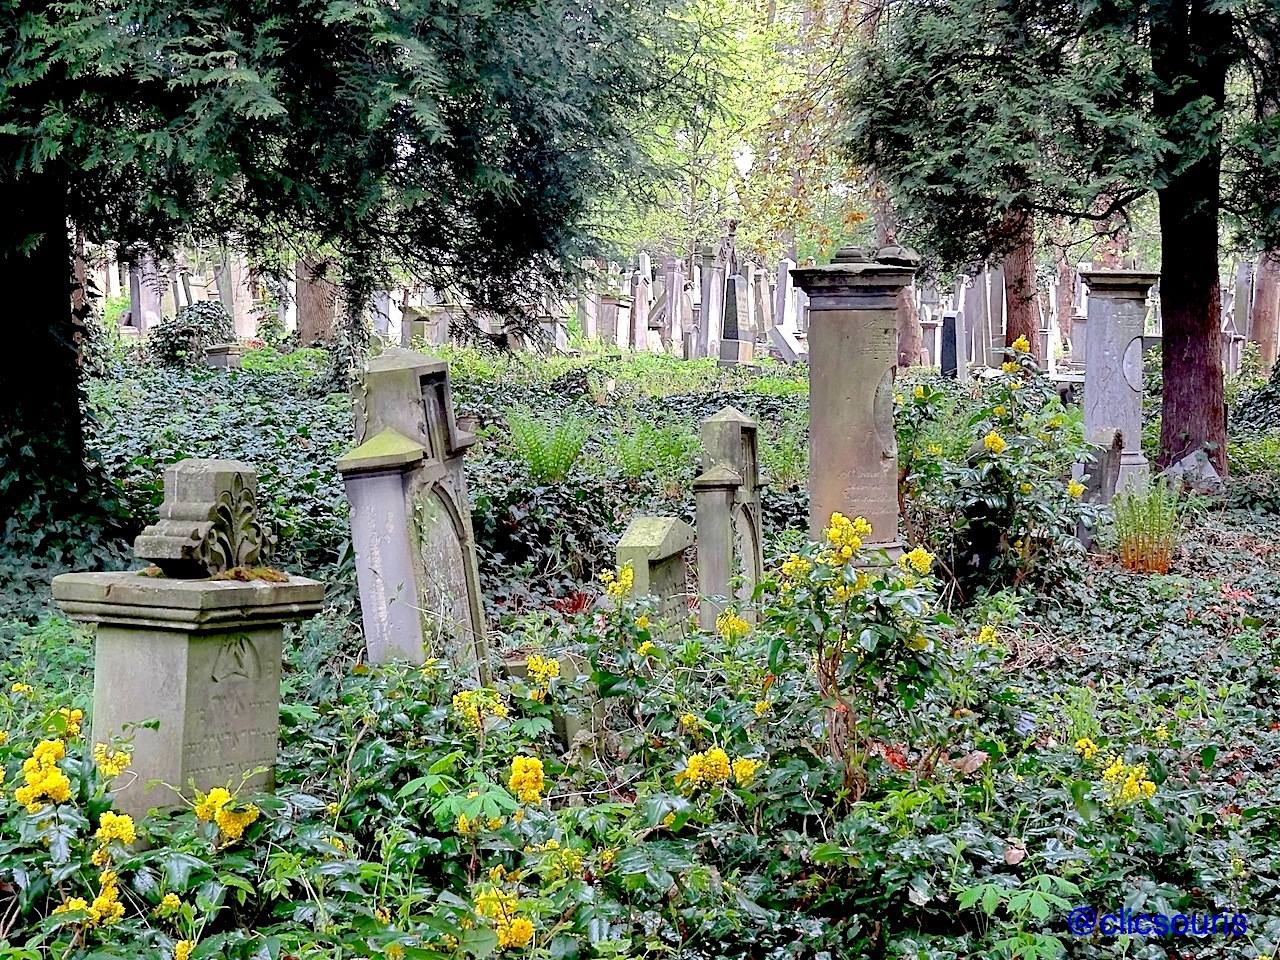 Wroclaw cimetière juif